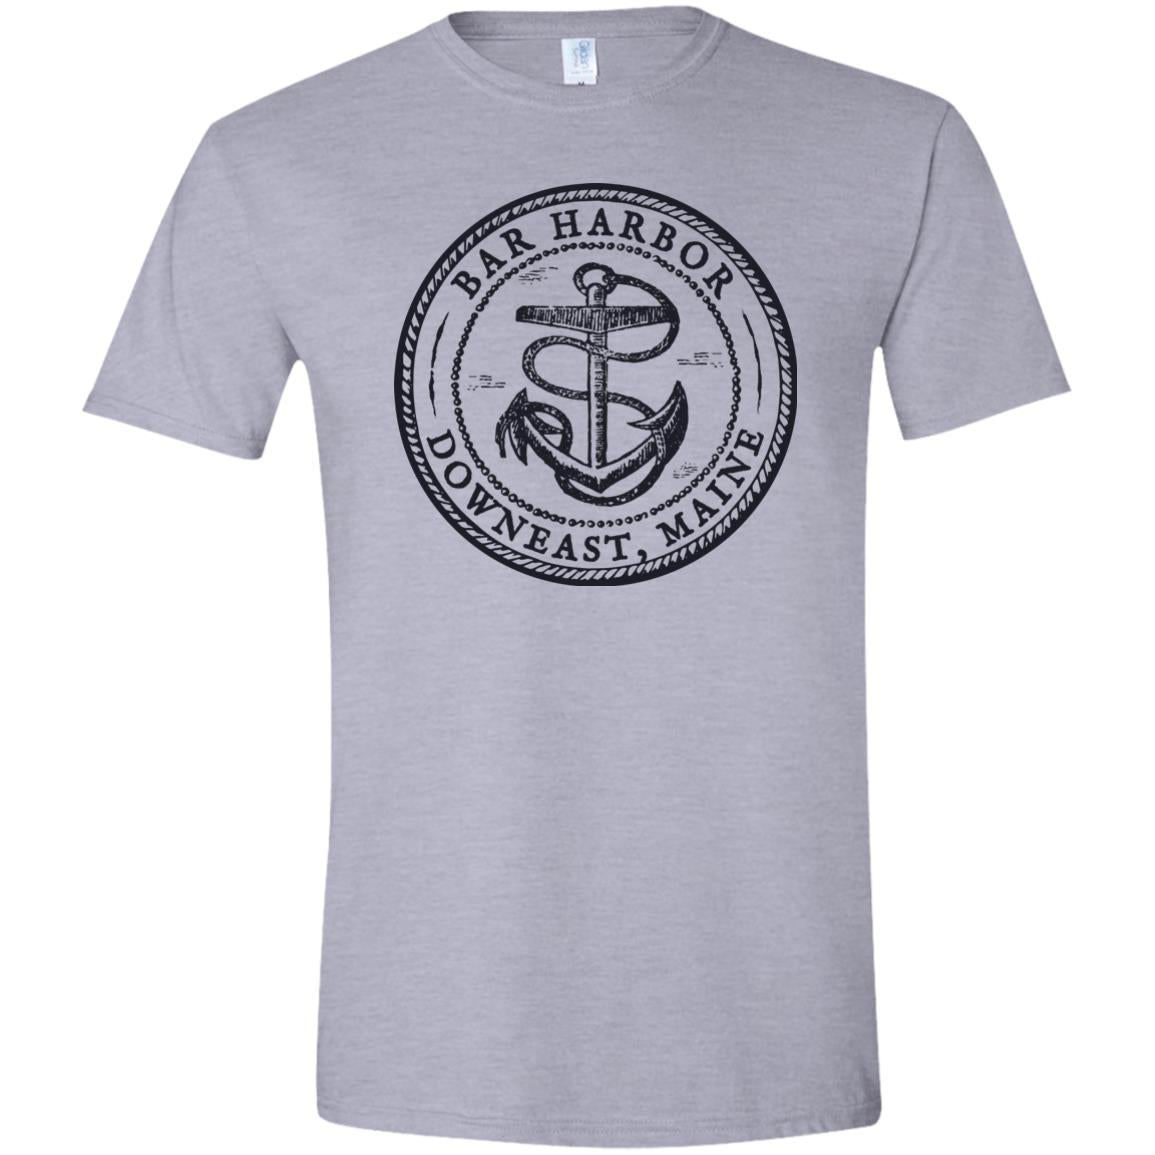 Vintage Bar Harbor Maine T-Shirt - Antique Anchor Seal Logo - Comfy Soft T-Shirt (Unisex Tee) - 207 Threads